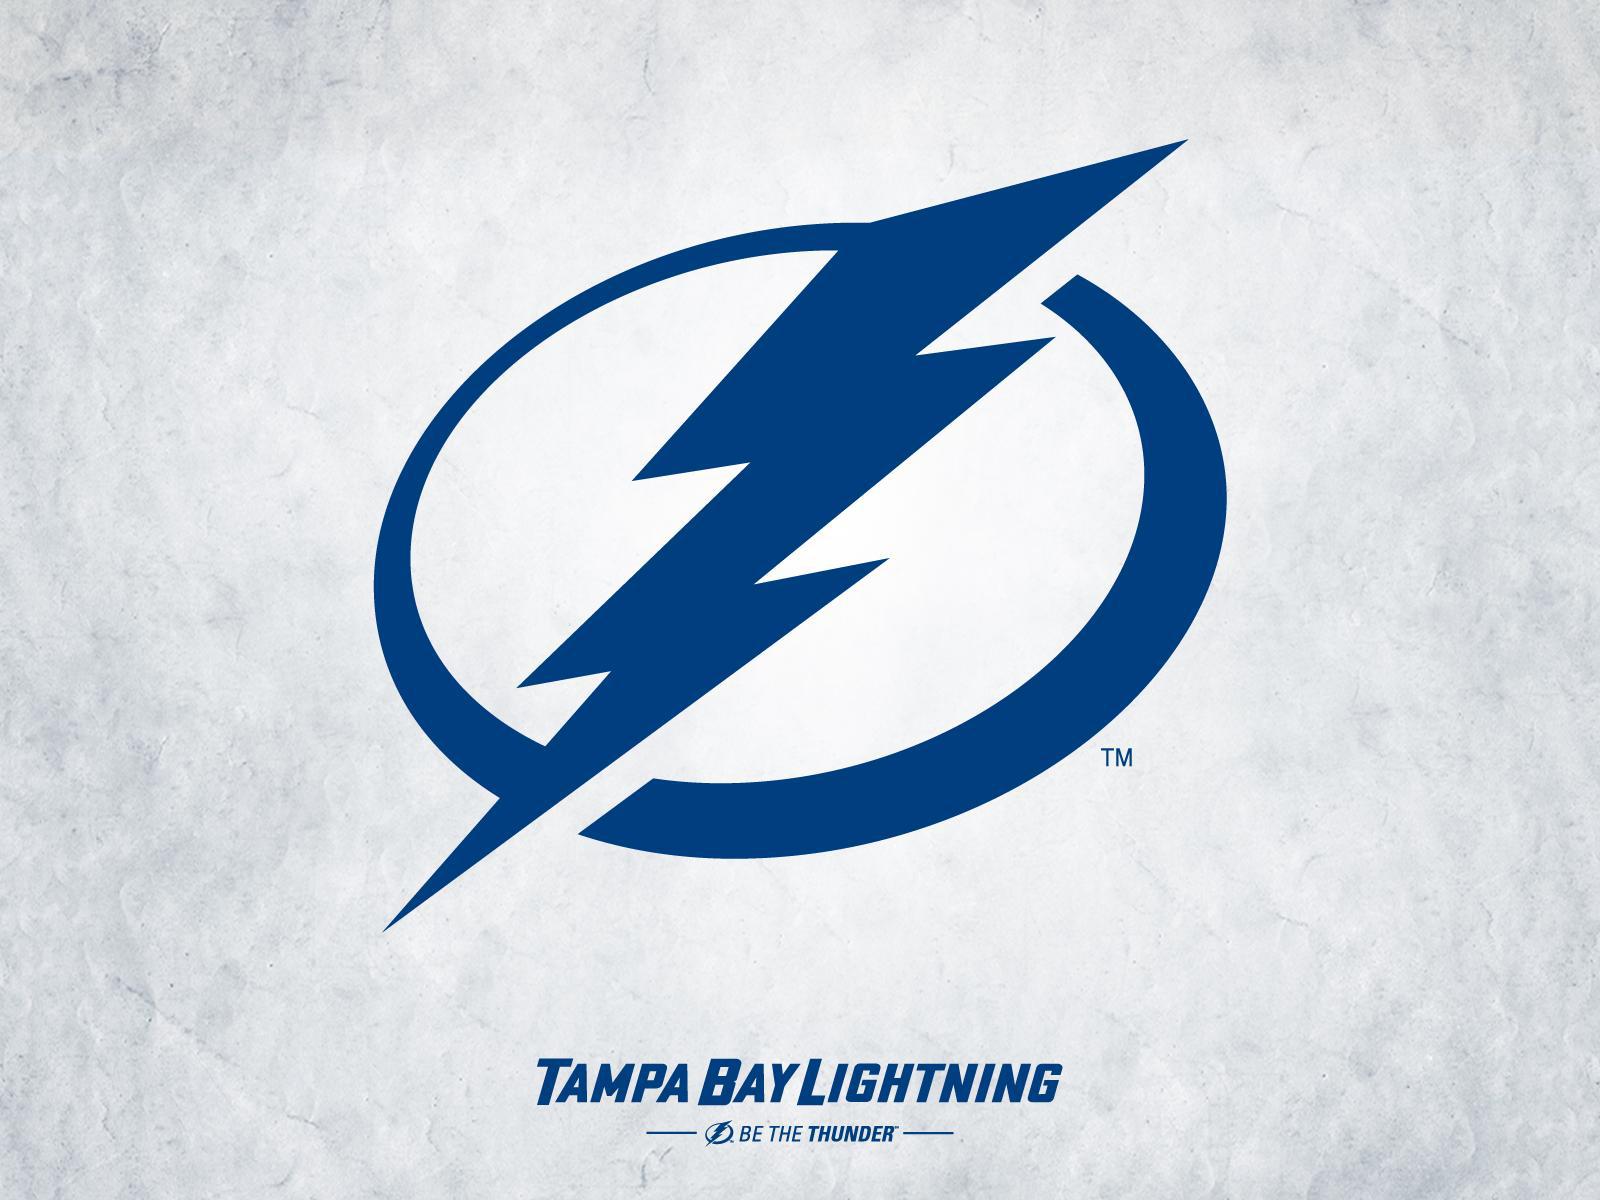 Tampa Bay Lightning Wallpaper Downloads Wallpaper Downloads